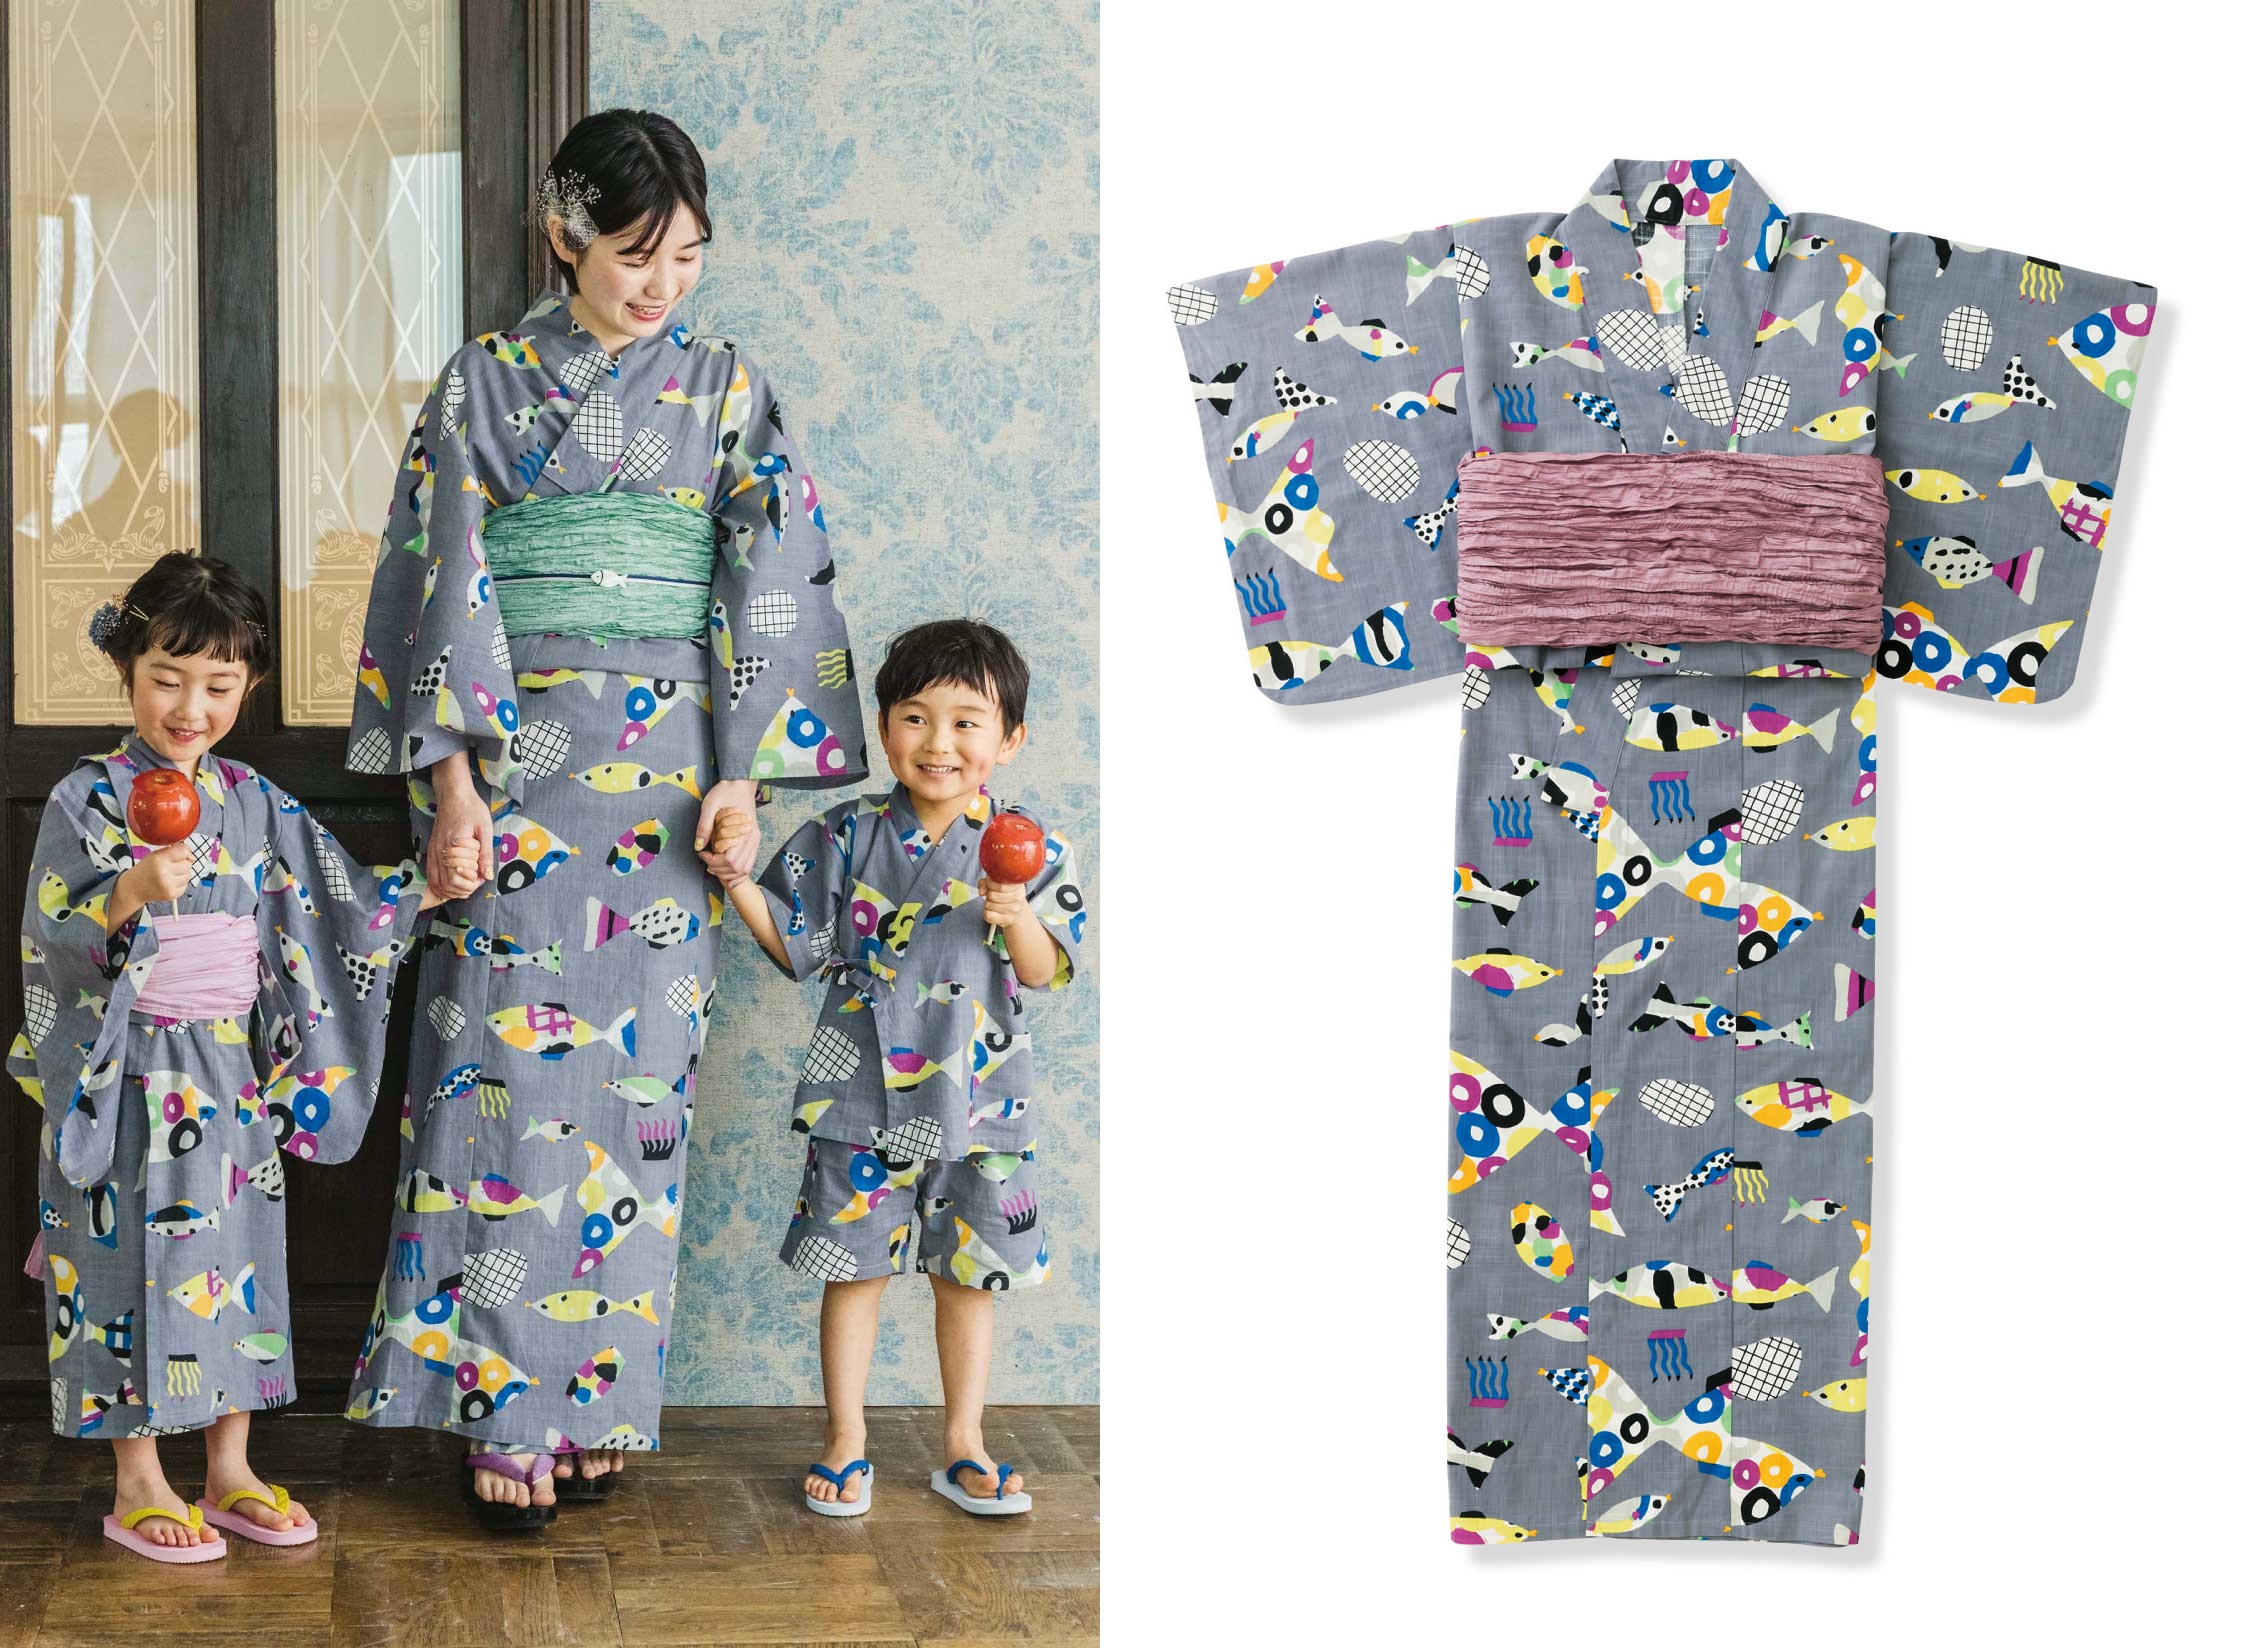 Bags Drawstring Bag Kimono Yukata Stock Vector (Royalty Free